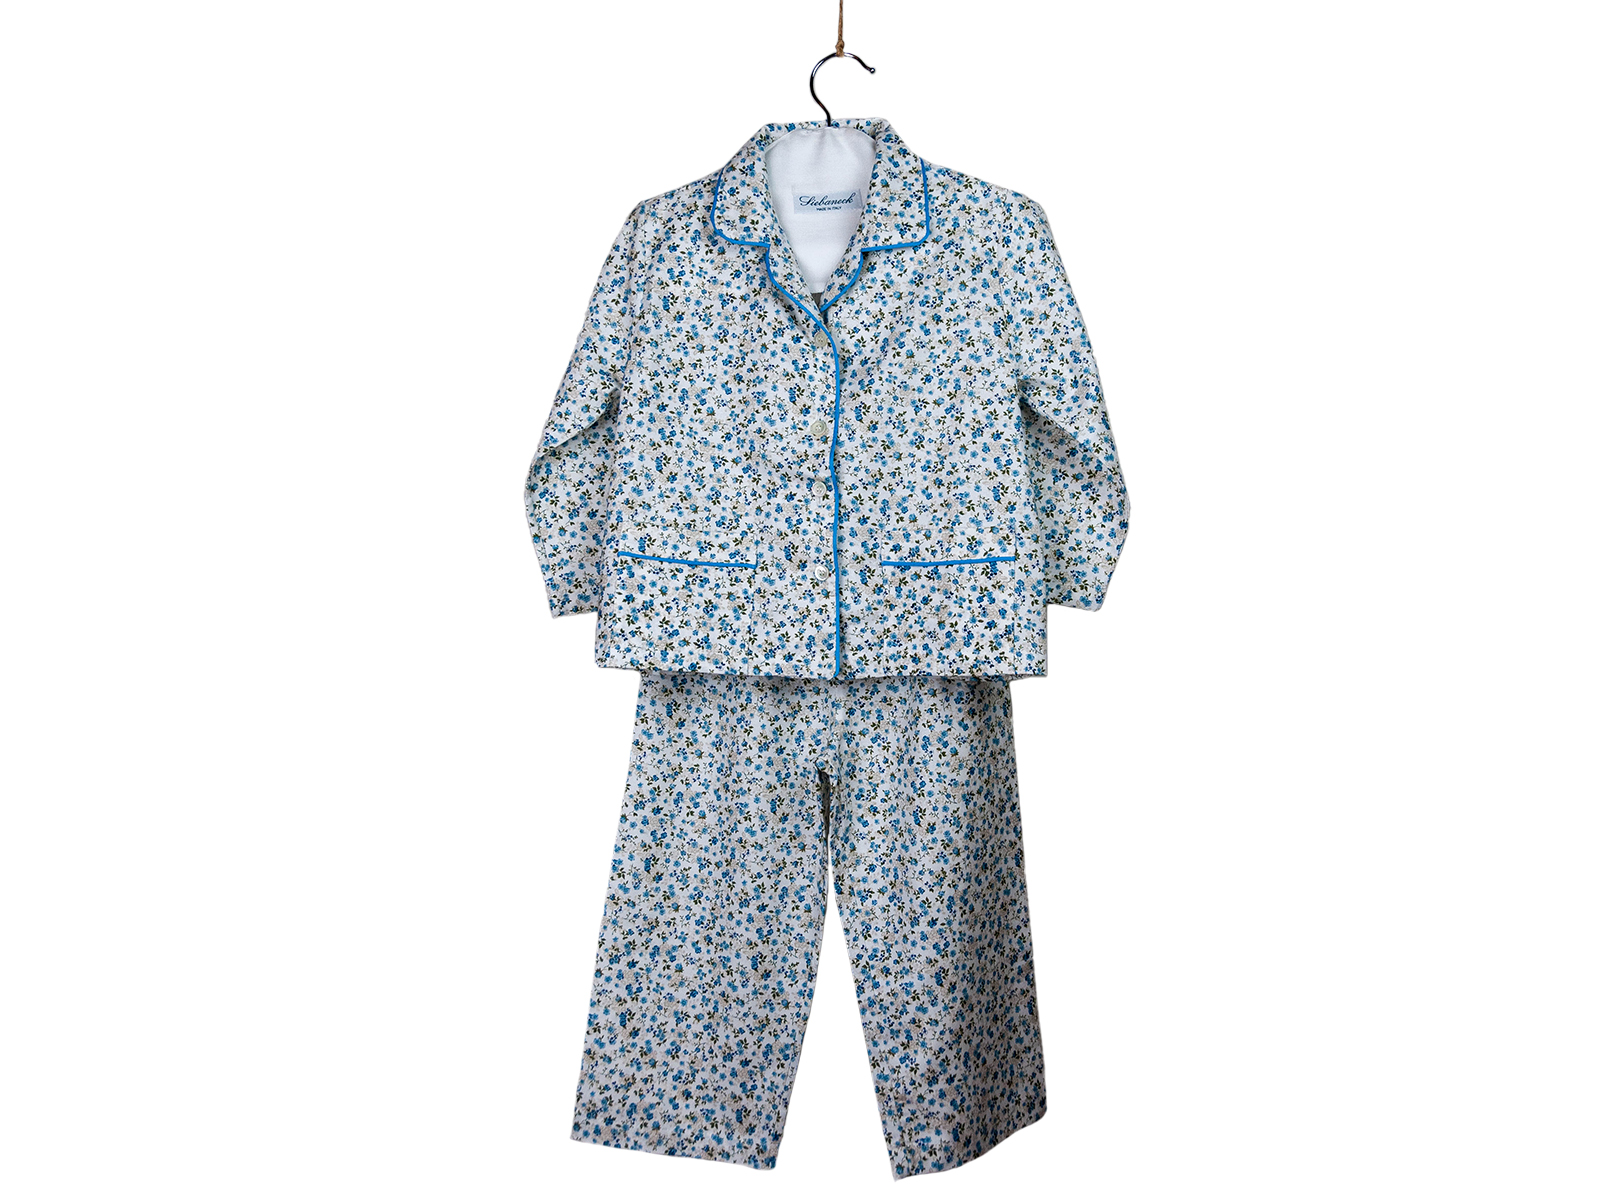 Siebaneck, i pigiami artigianali italiani: - bambino- mod.190 bianco fiori azzurri